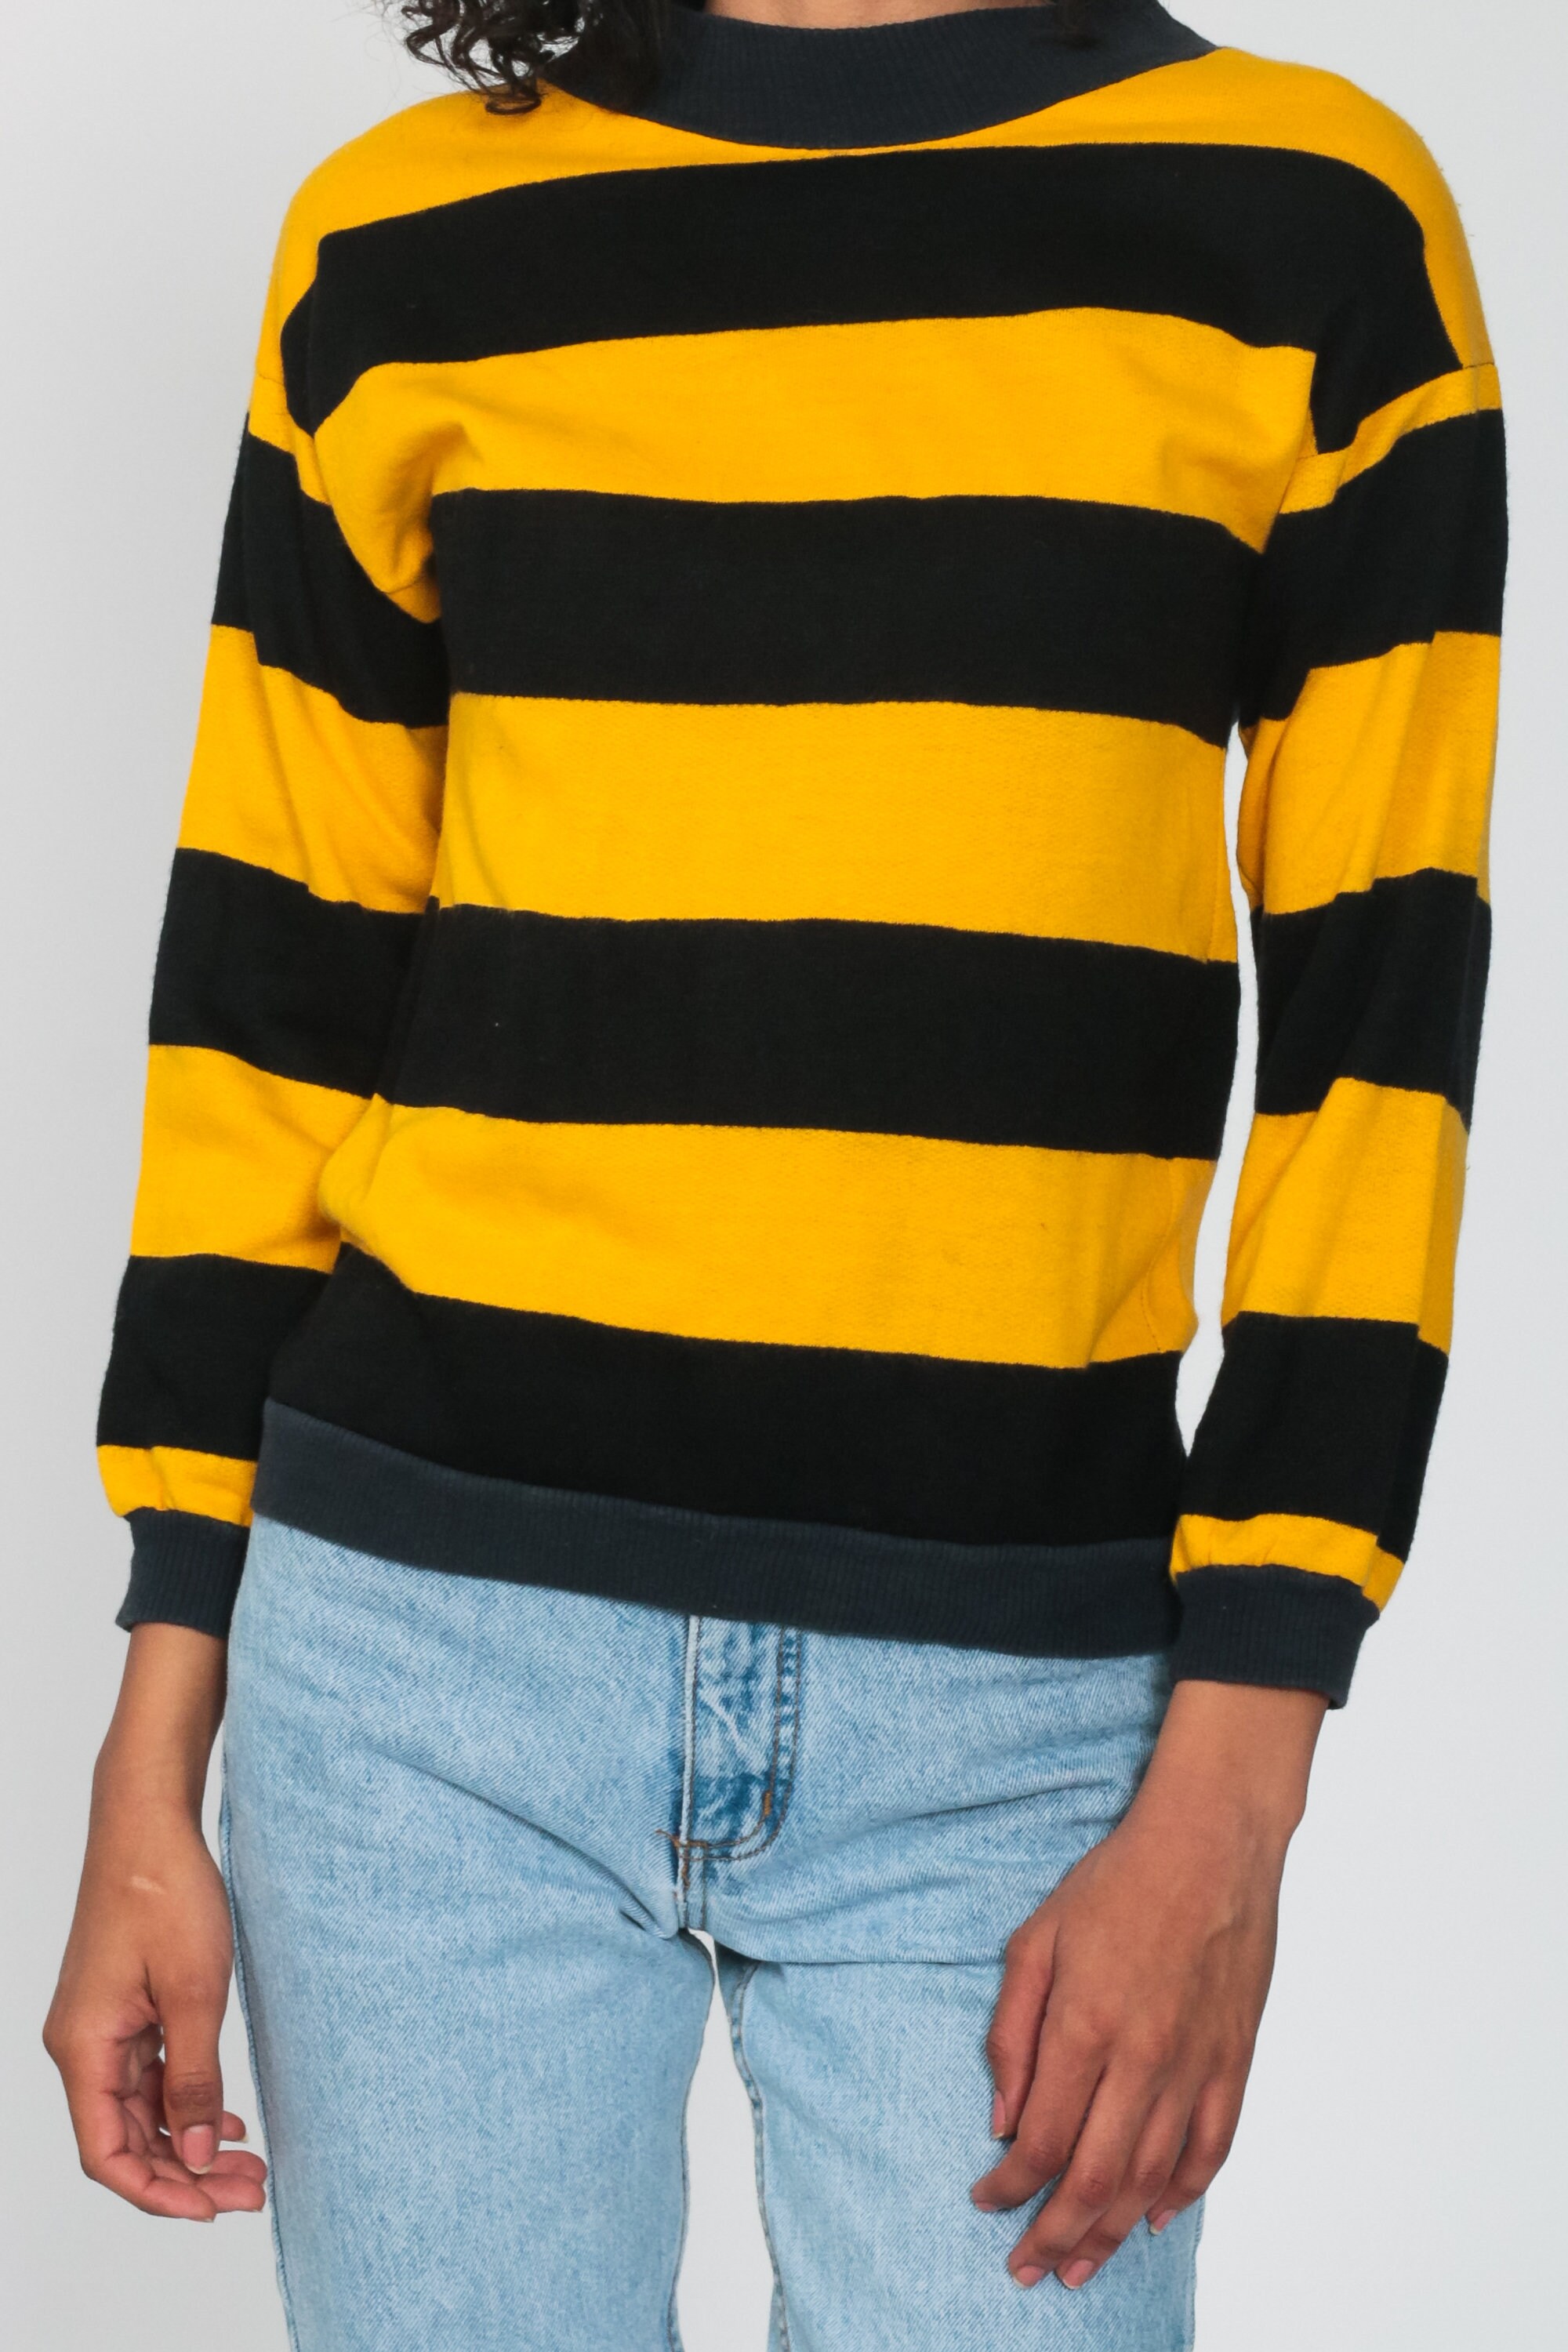 Yellow Striped Sweatshirt 80s Retro Sweatshirt Black | Etsy